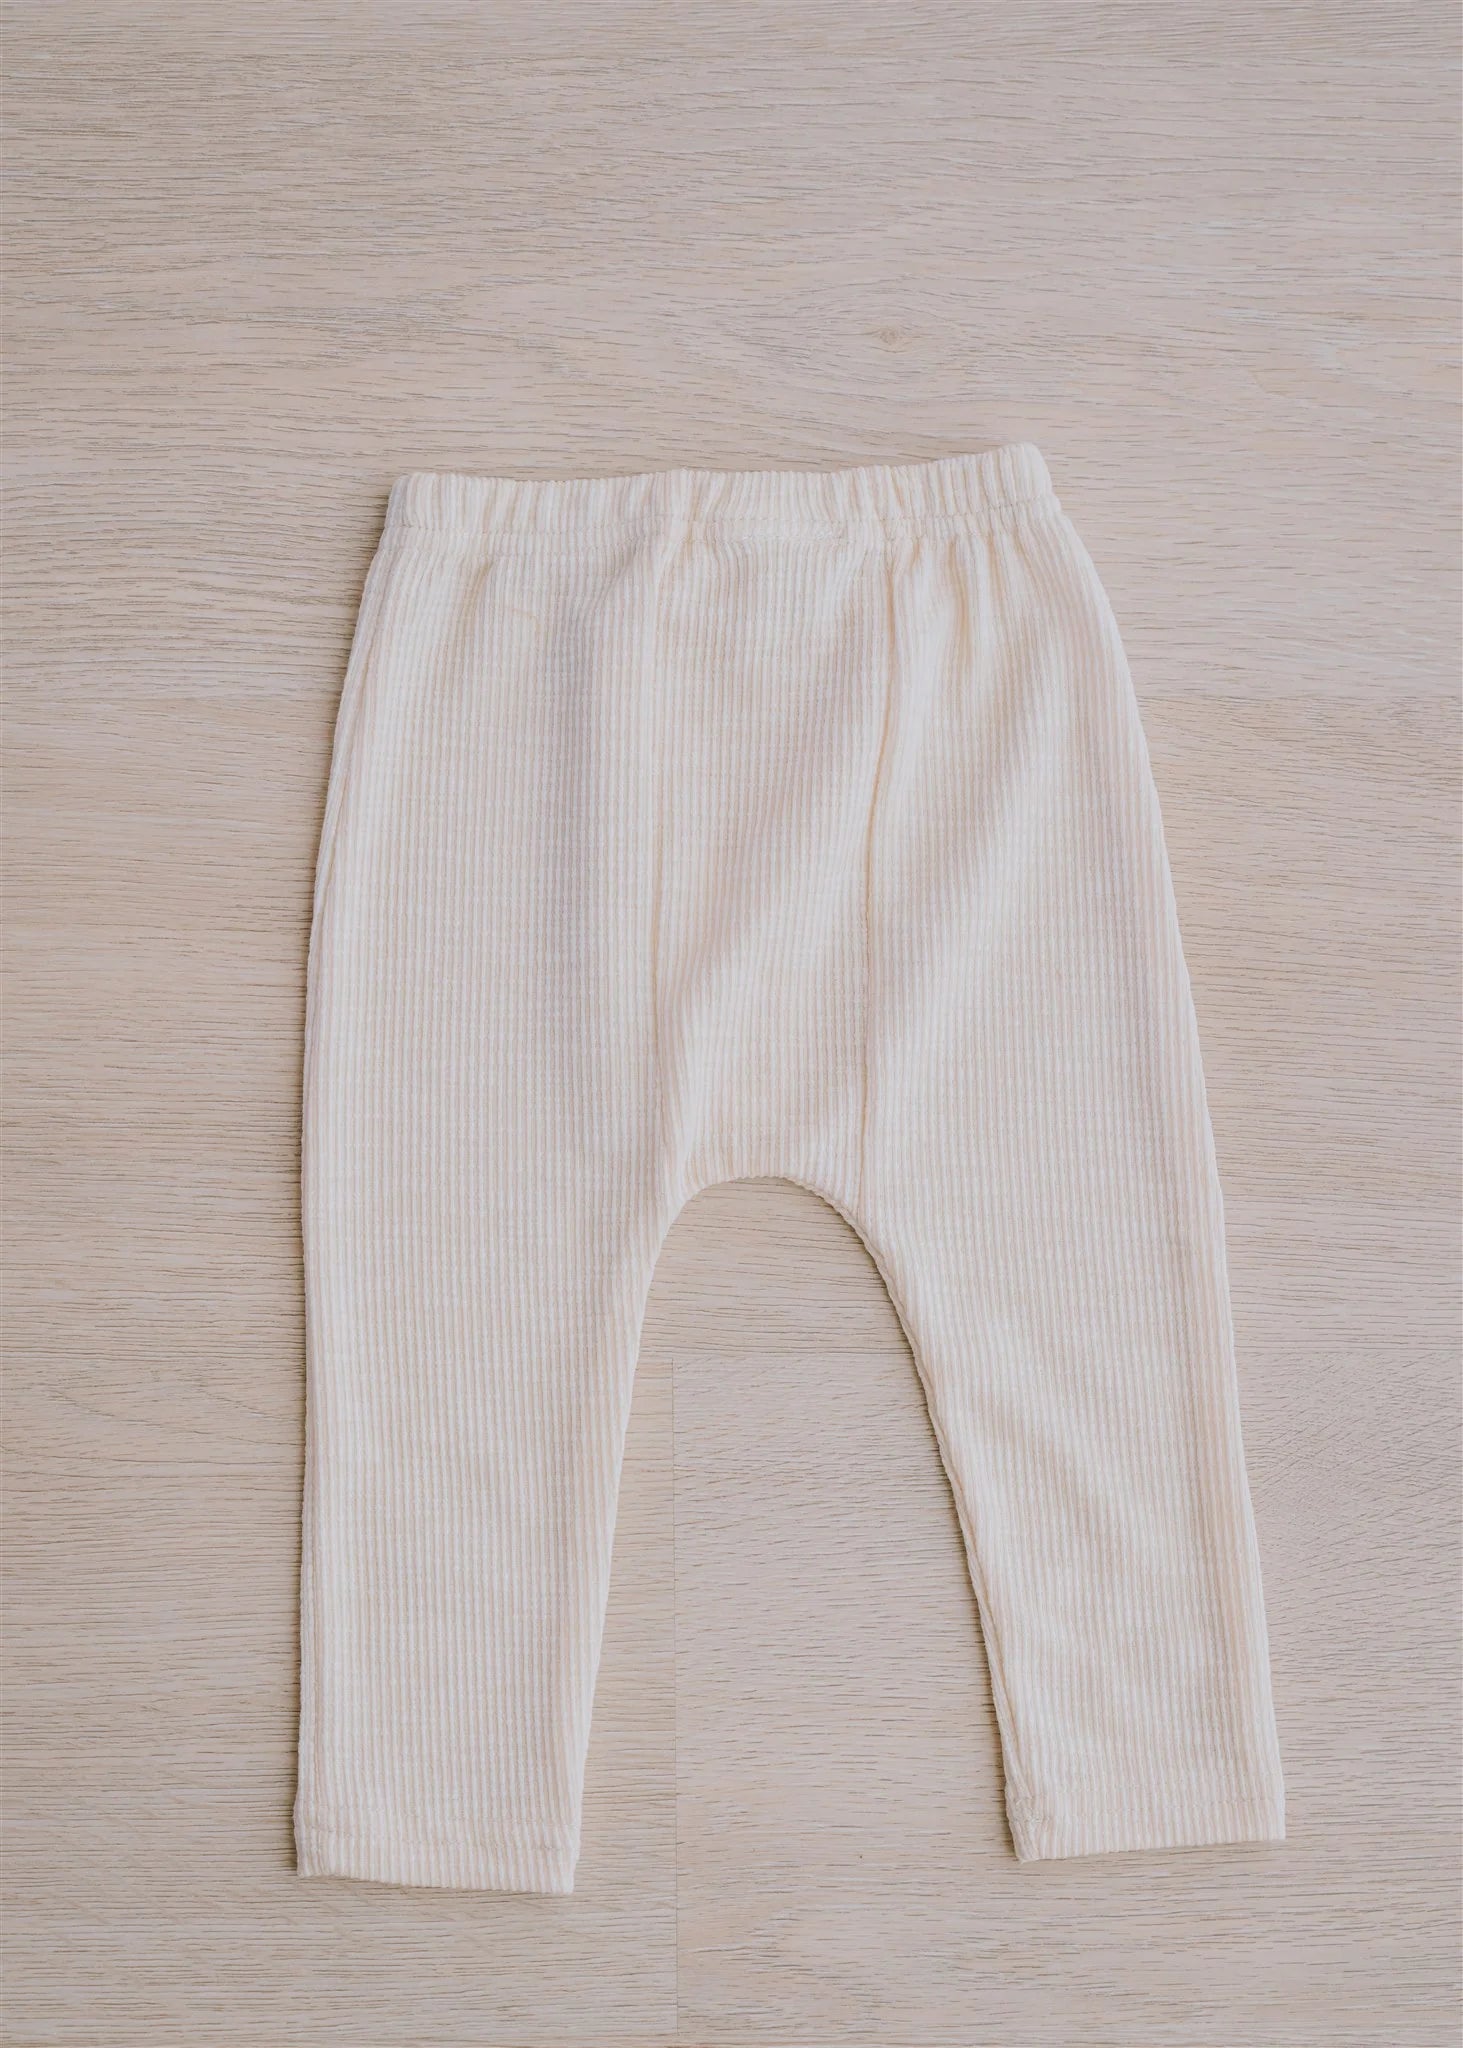 Cotton Drawstring Pants - Cream